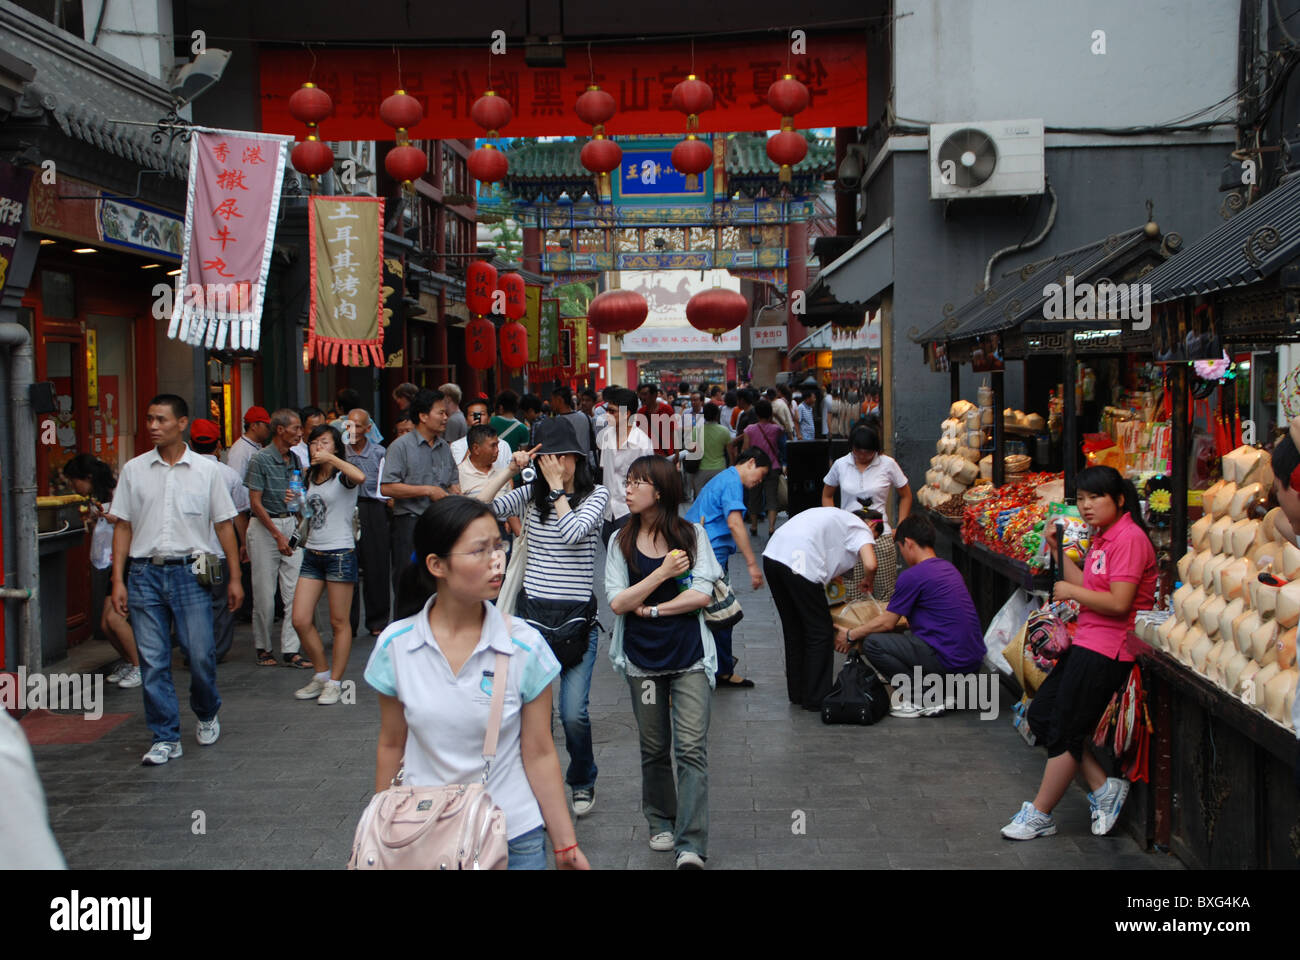 Food Market, Untraditional Food, Outdoor, Wanfujing street, Beijing, China Stock Photo